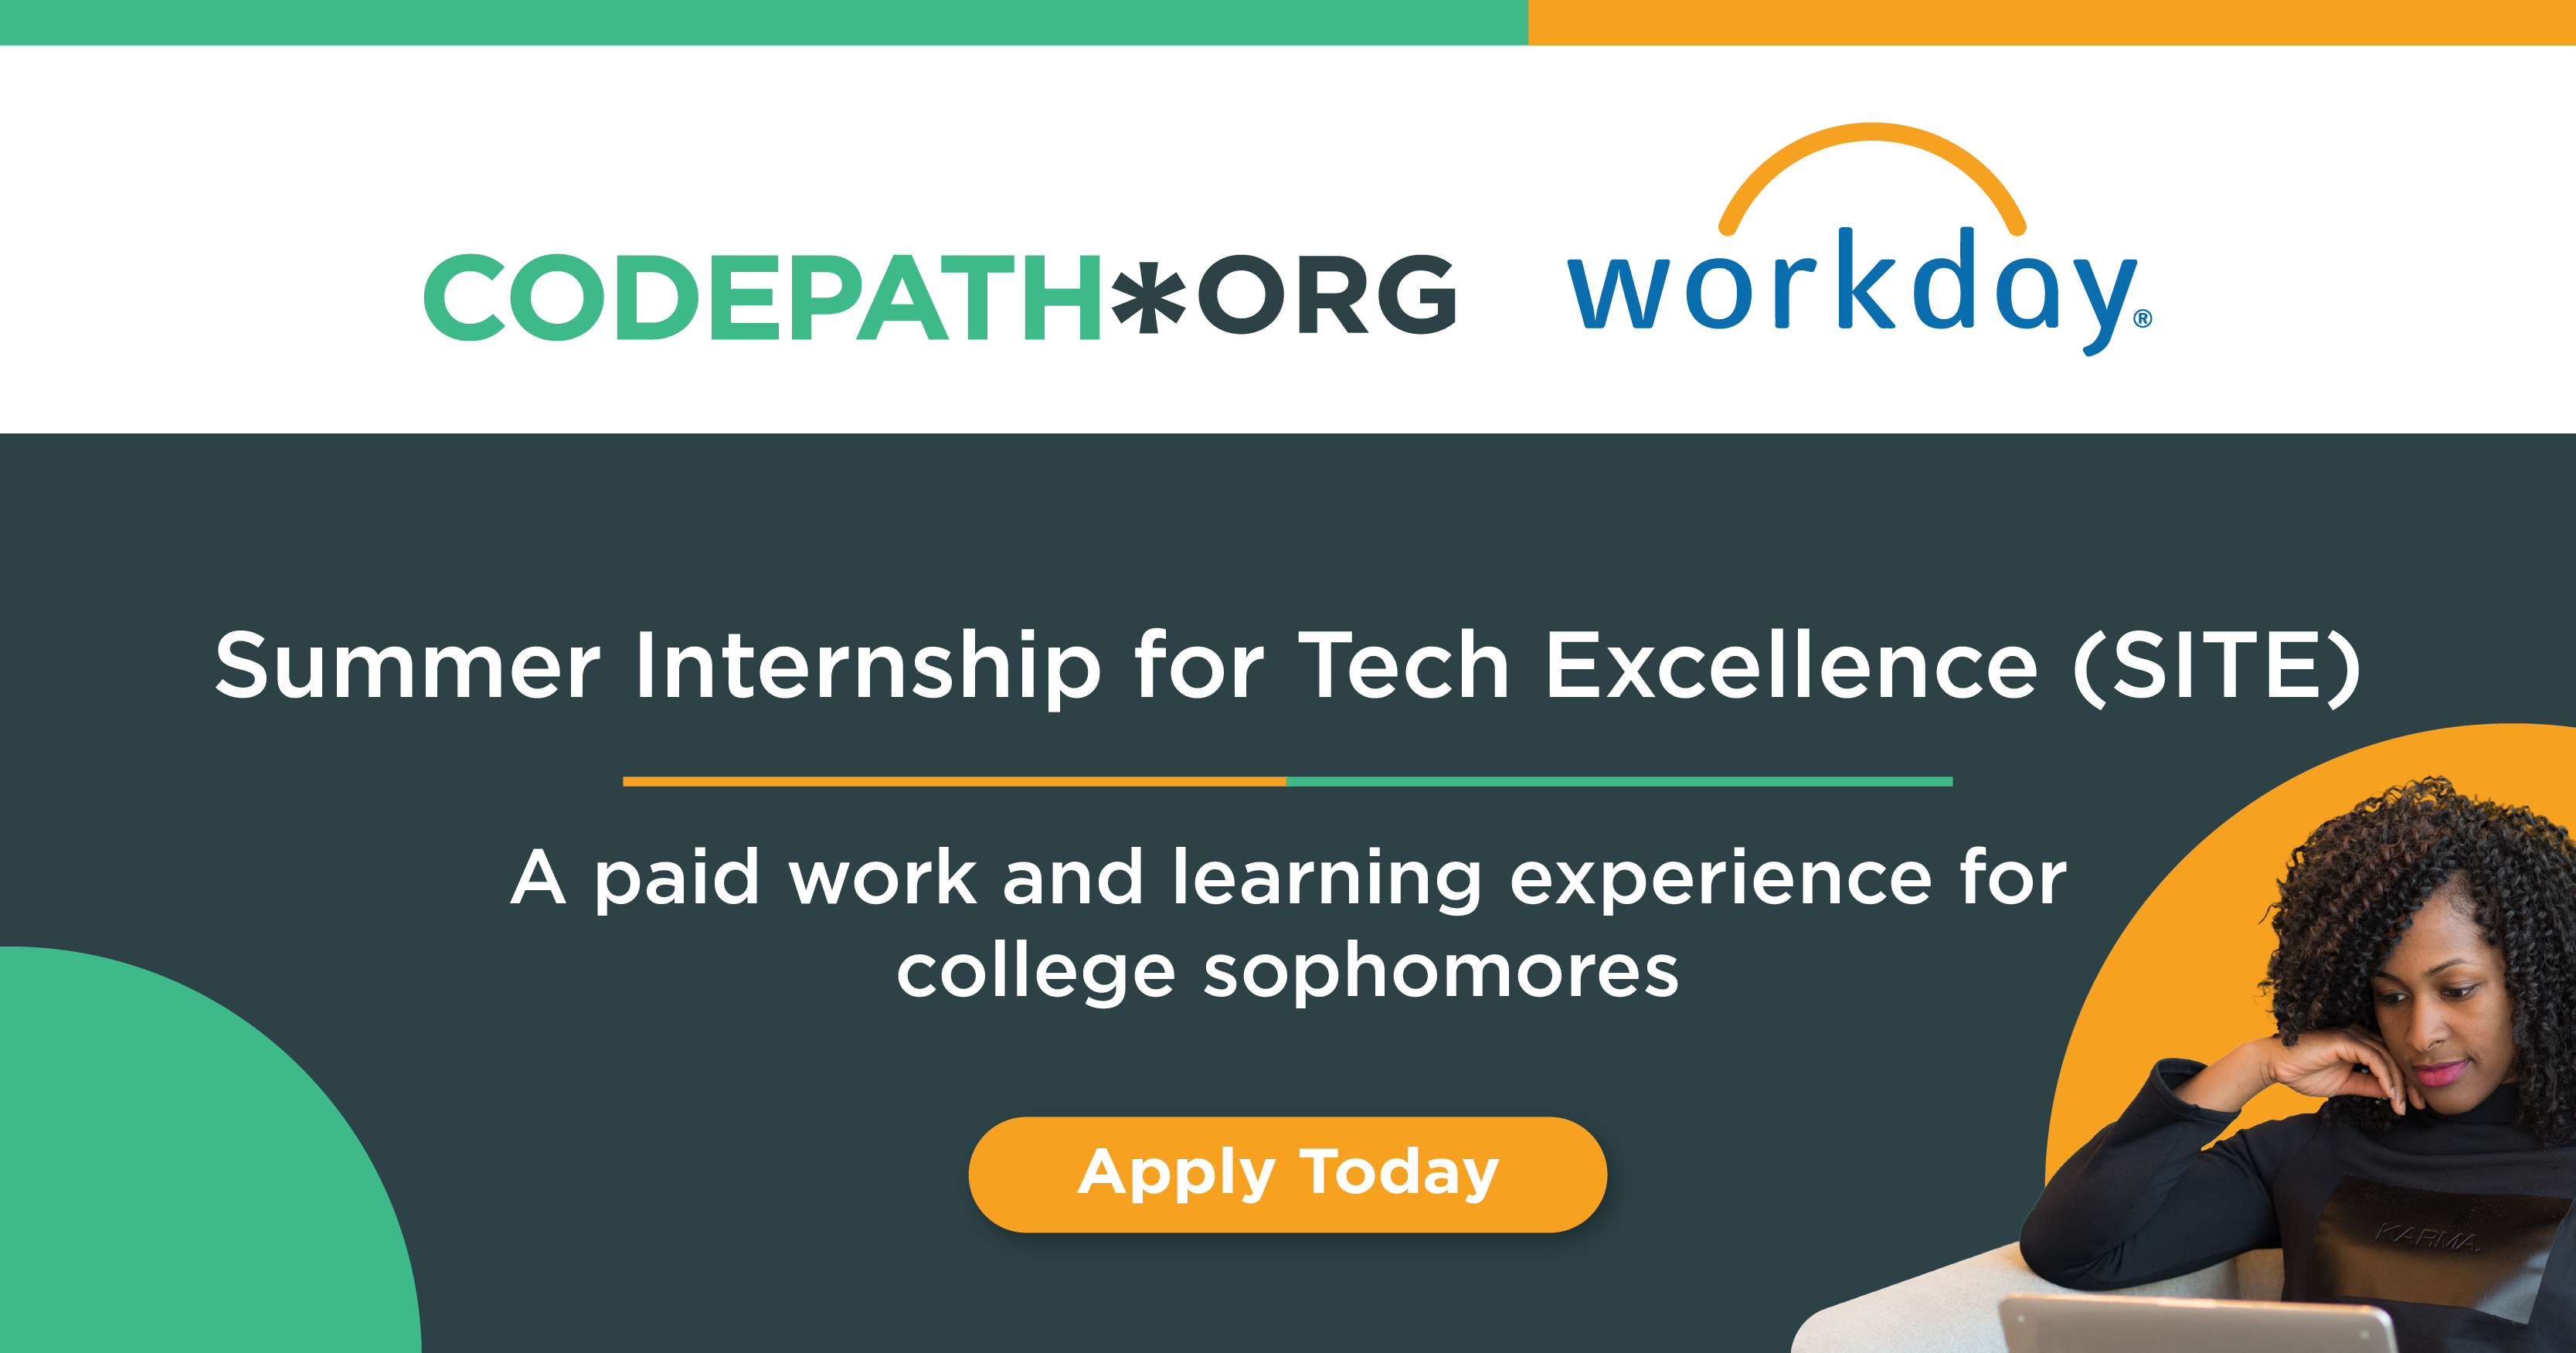 CodePath Summer Internship for Tech Excellence (SITE)